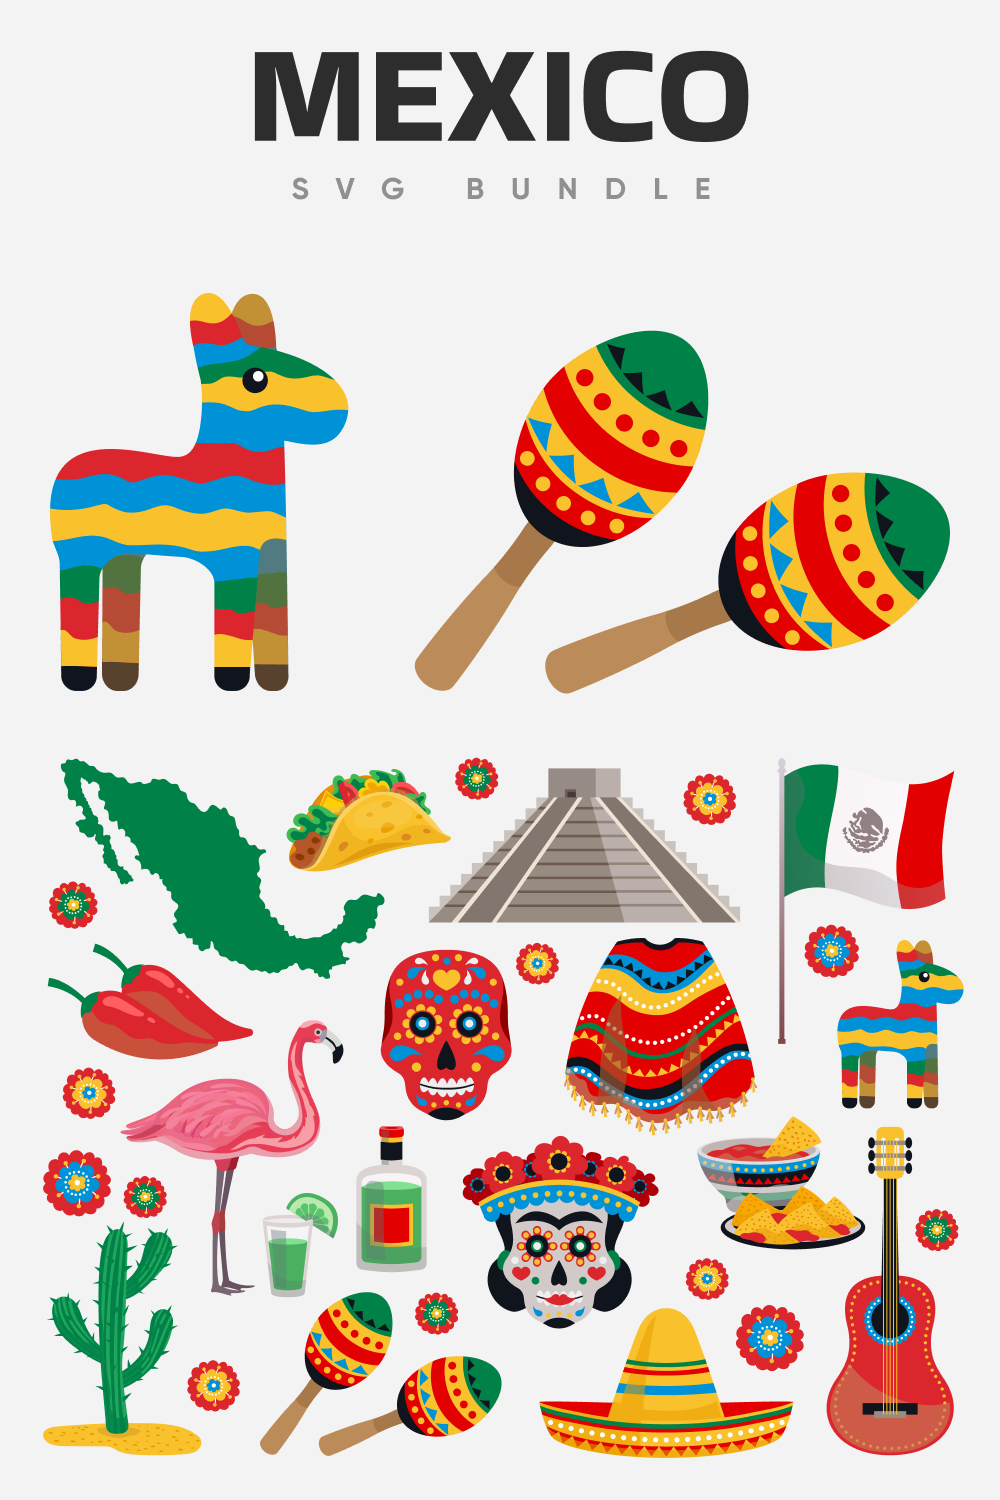 Mexico SVG bundle.